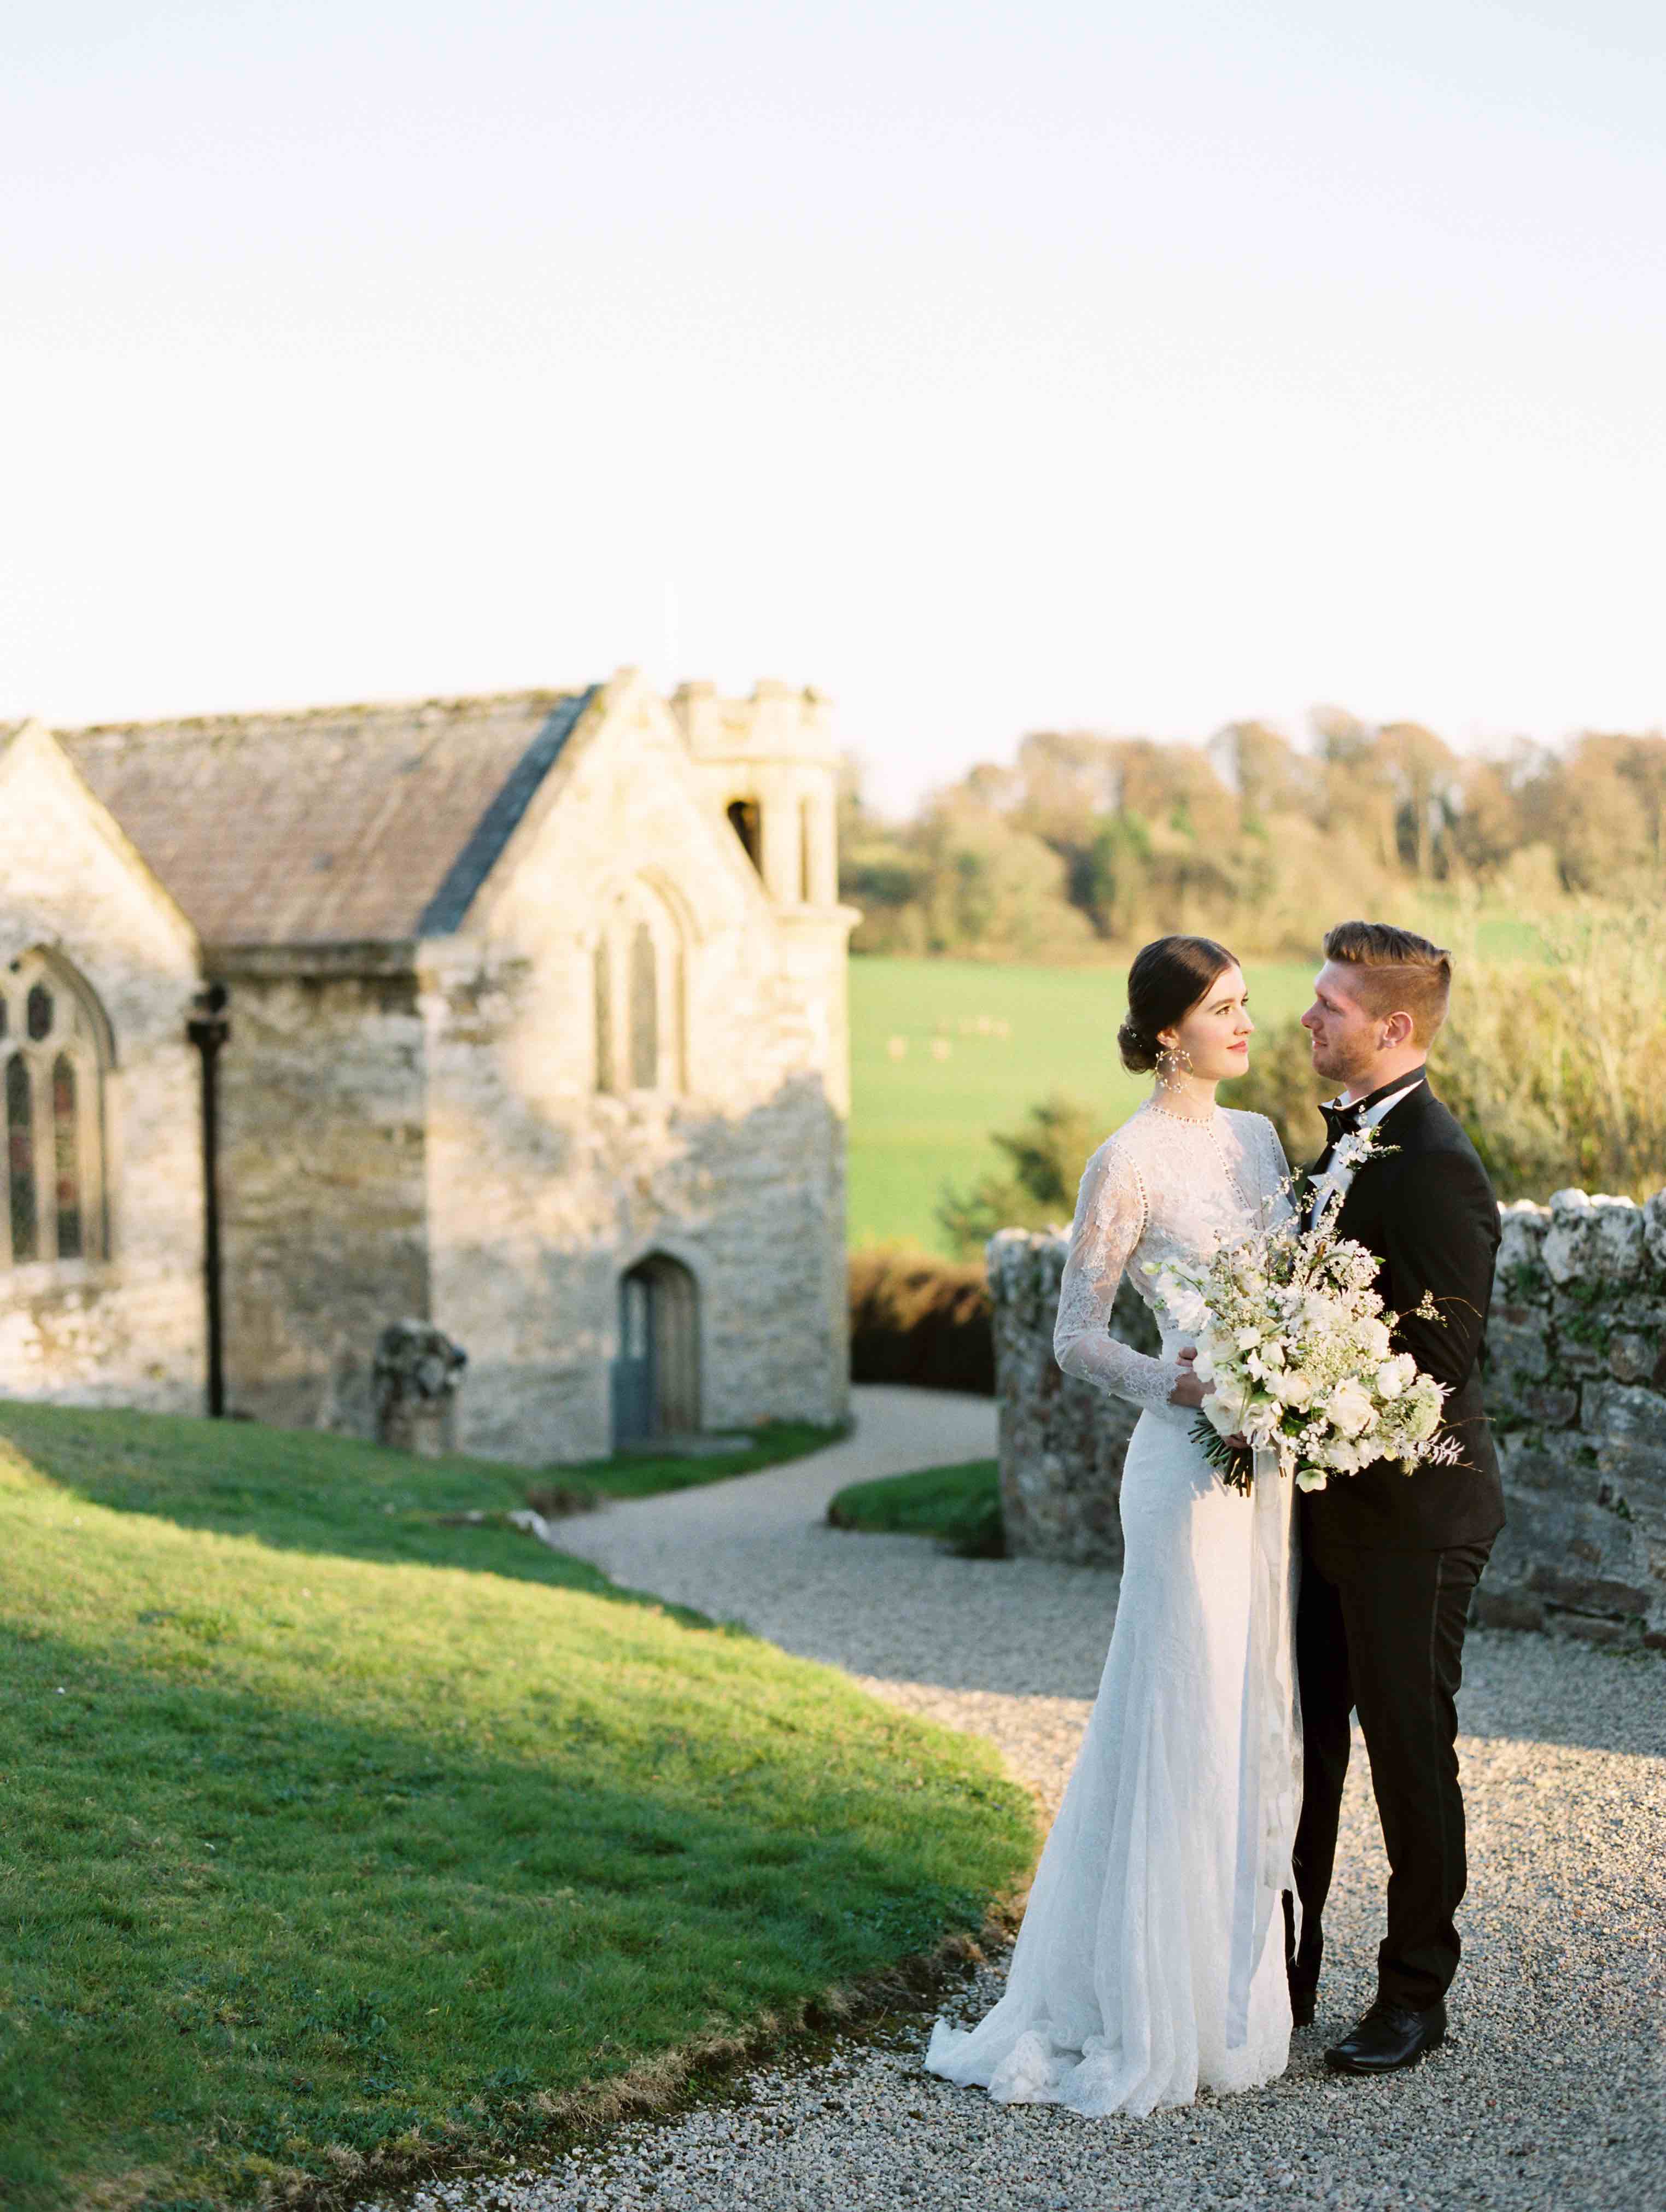 Romantic English wedding at Boconnoc, Cornwall, UK | The Timeless Stylist | Hannah Duffy